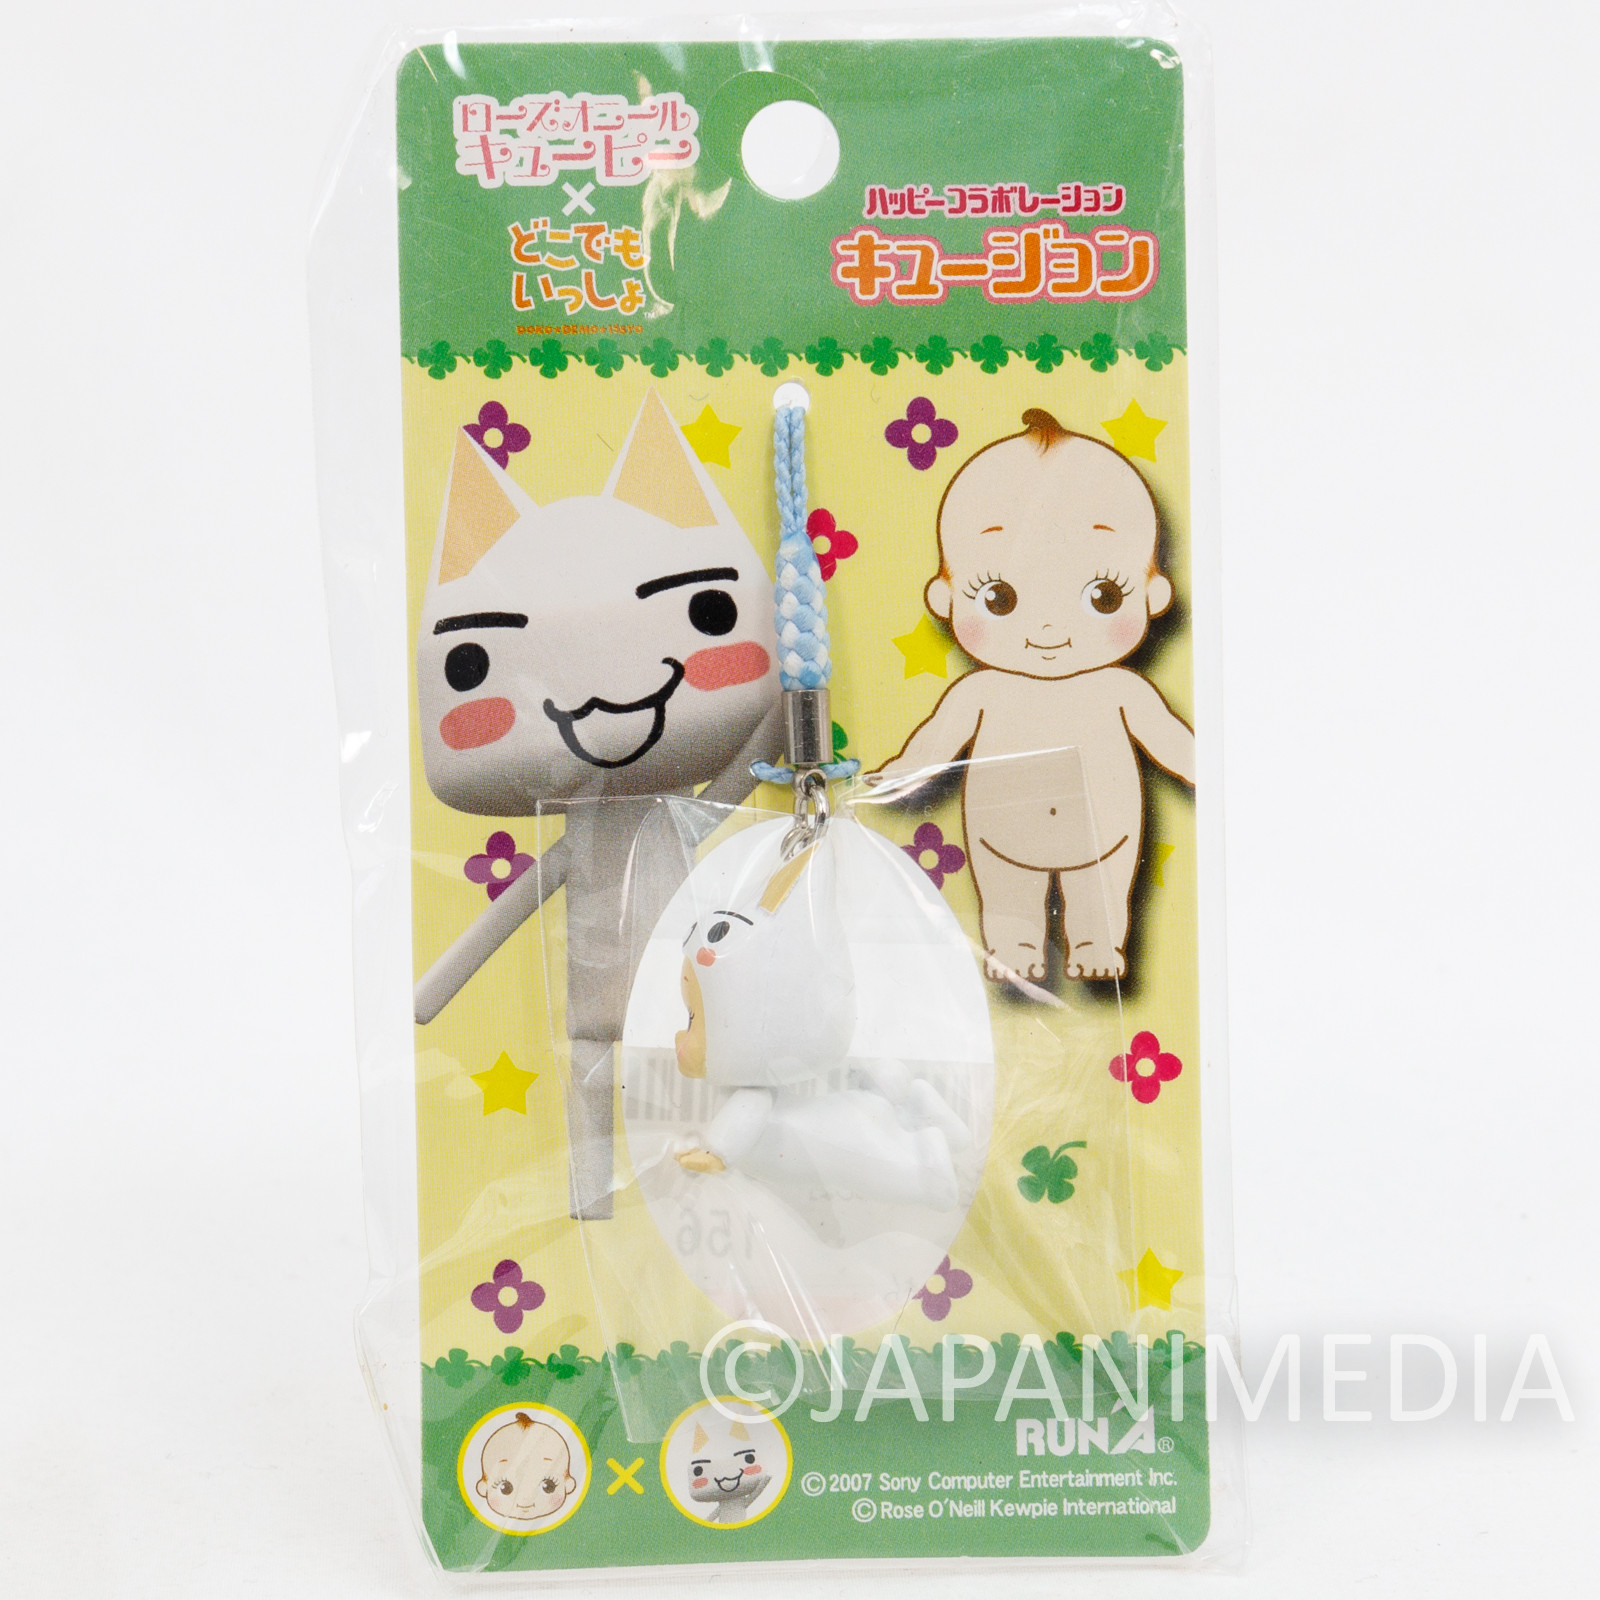 Sony Cat TORO Doko Demo Issyo Rose O'neill Kewpie Kewsion Figure Strap JAPAN GAME